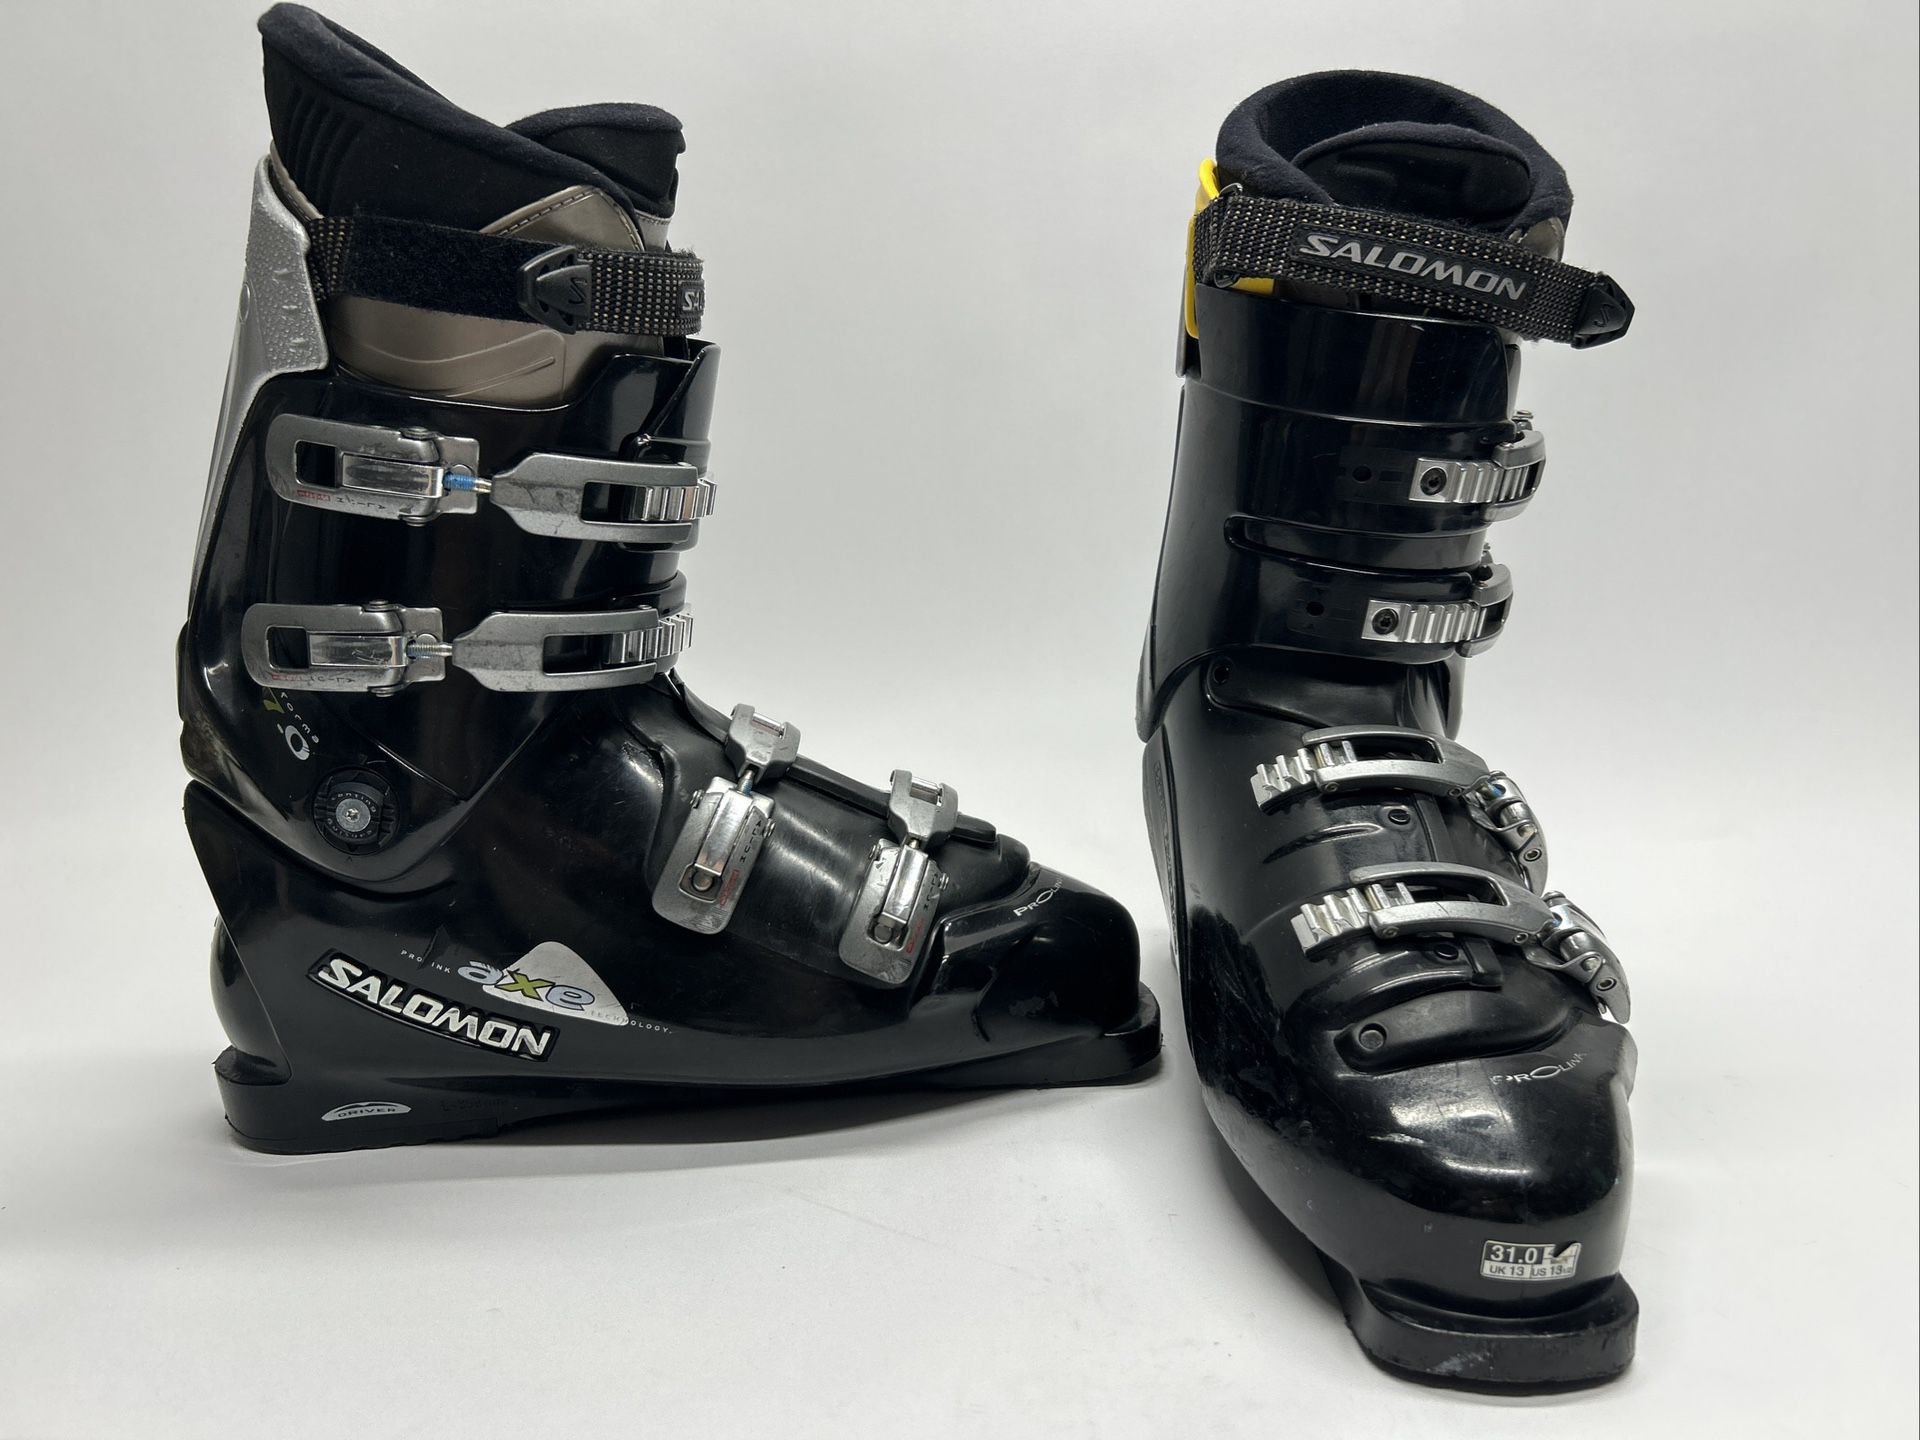 Salomon Performa 7.0 Black Downhill Alpine Ski Boots Men's Size 31 13.5 US